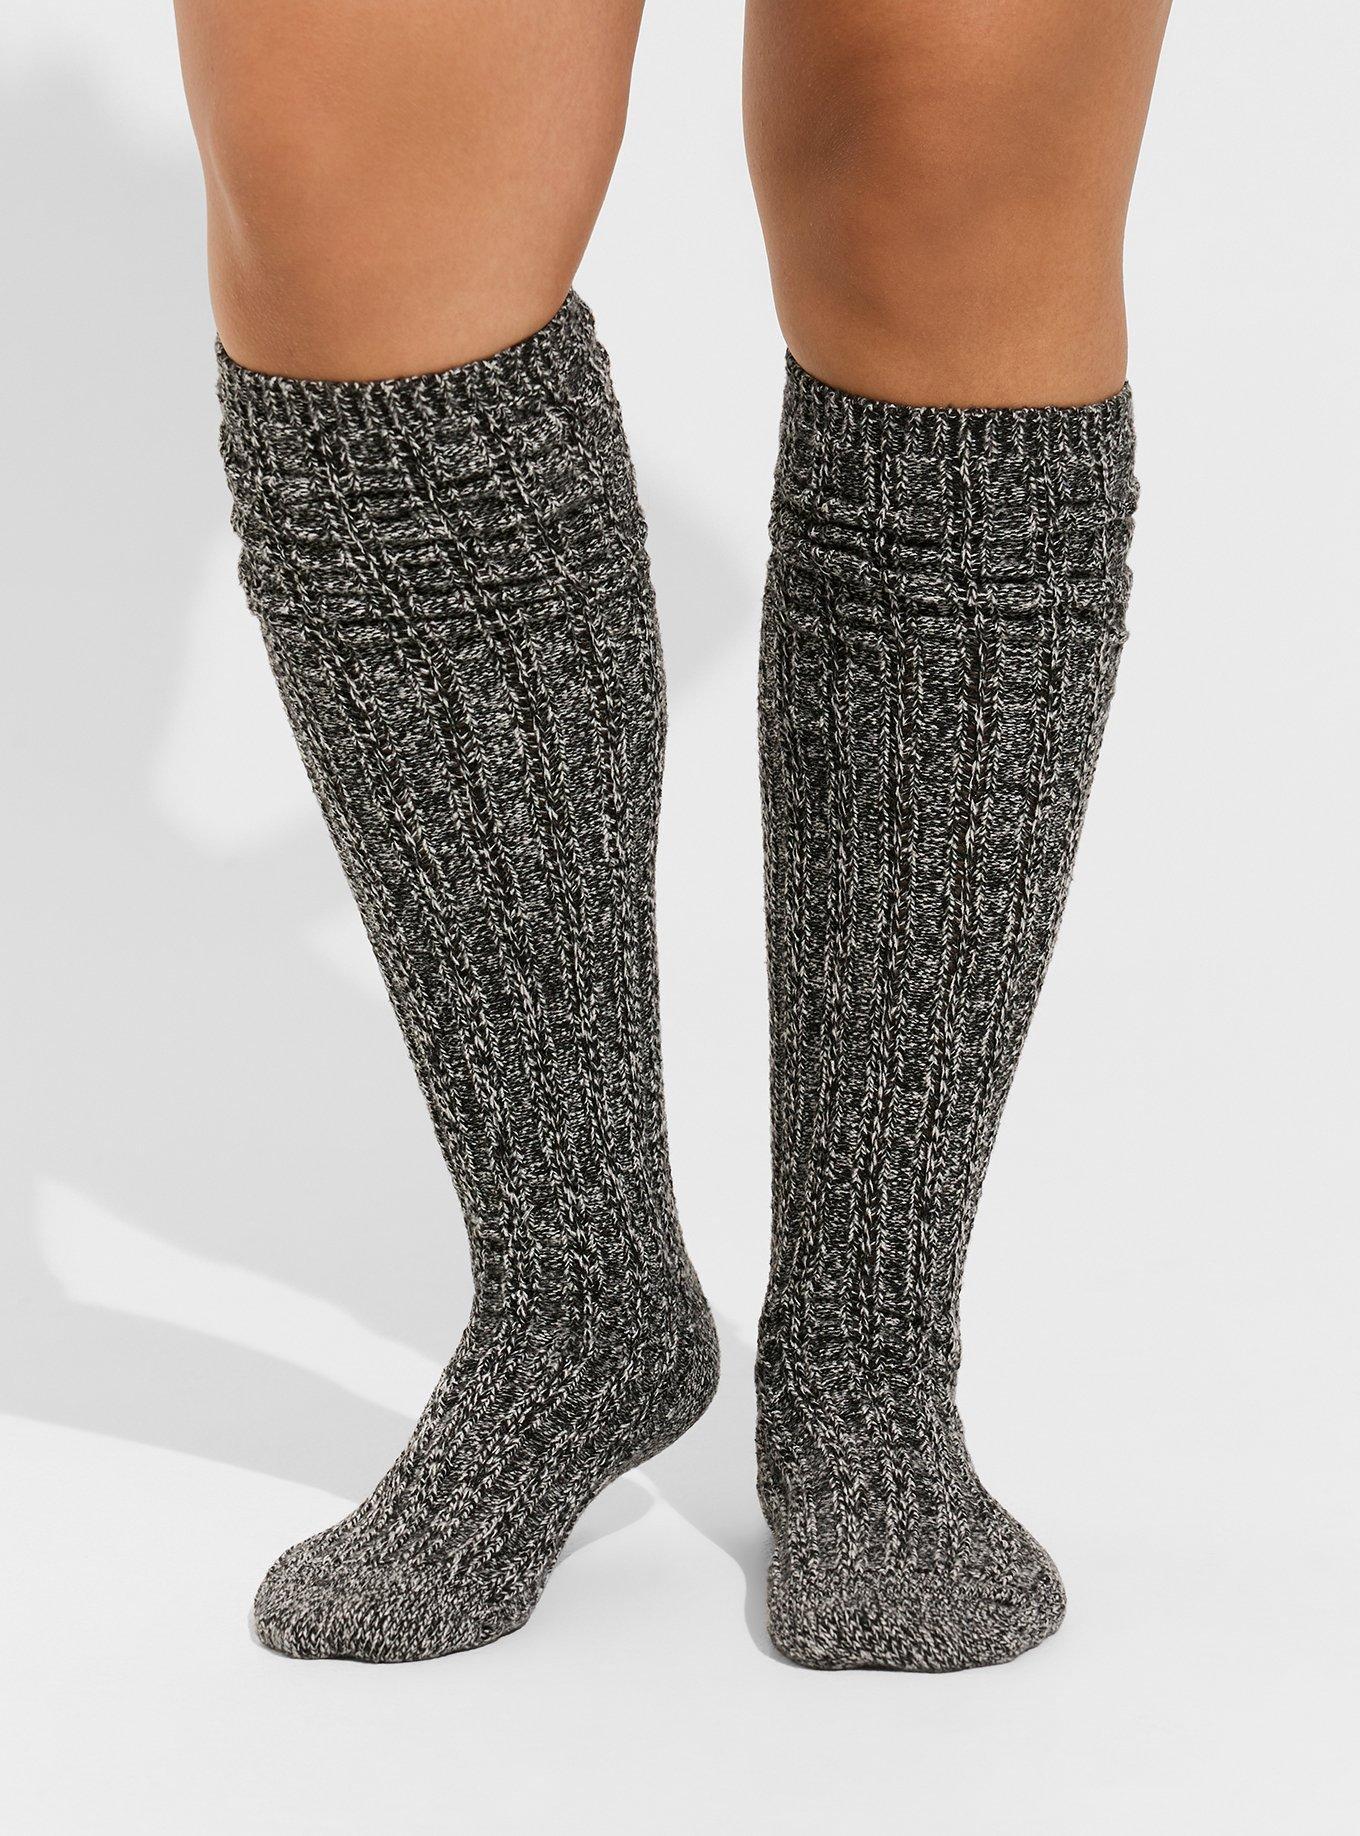 debby cowley recommends torrid knee high socks pic